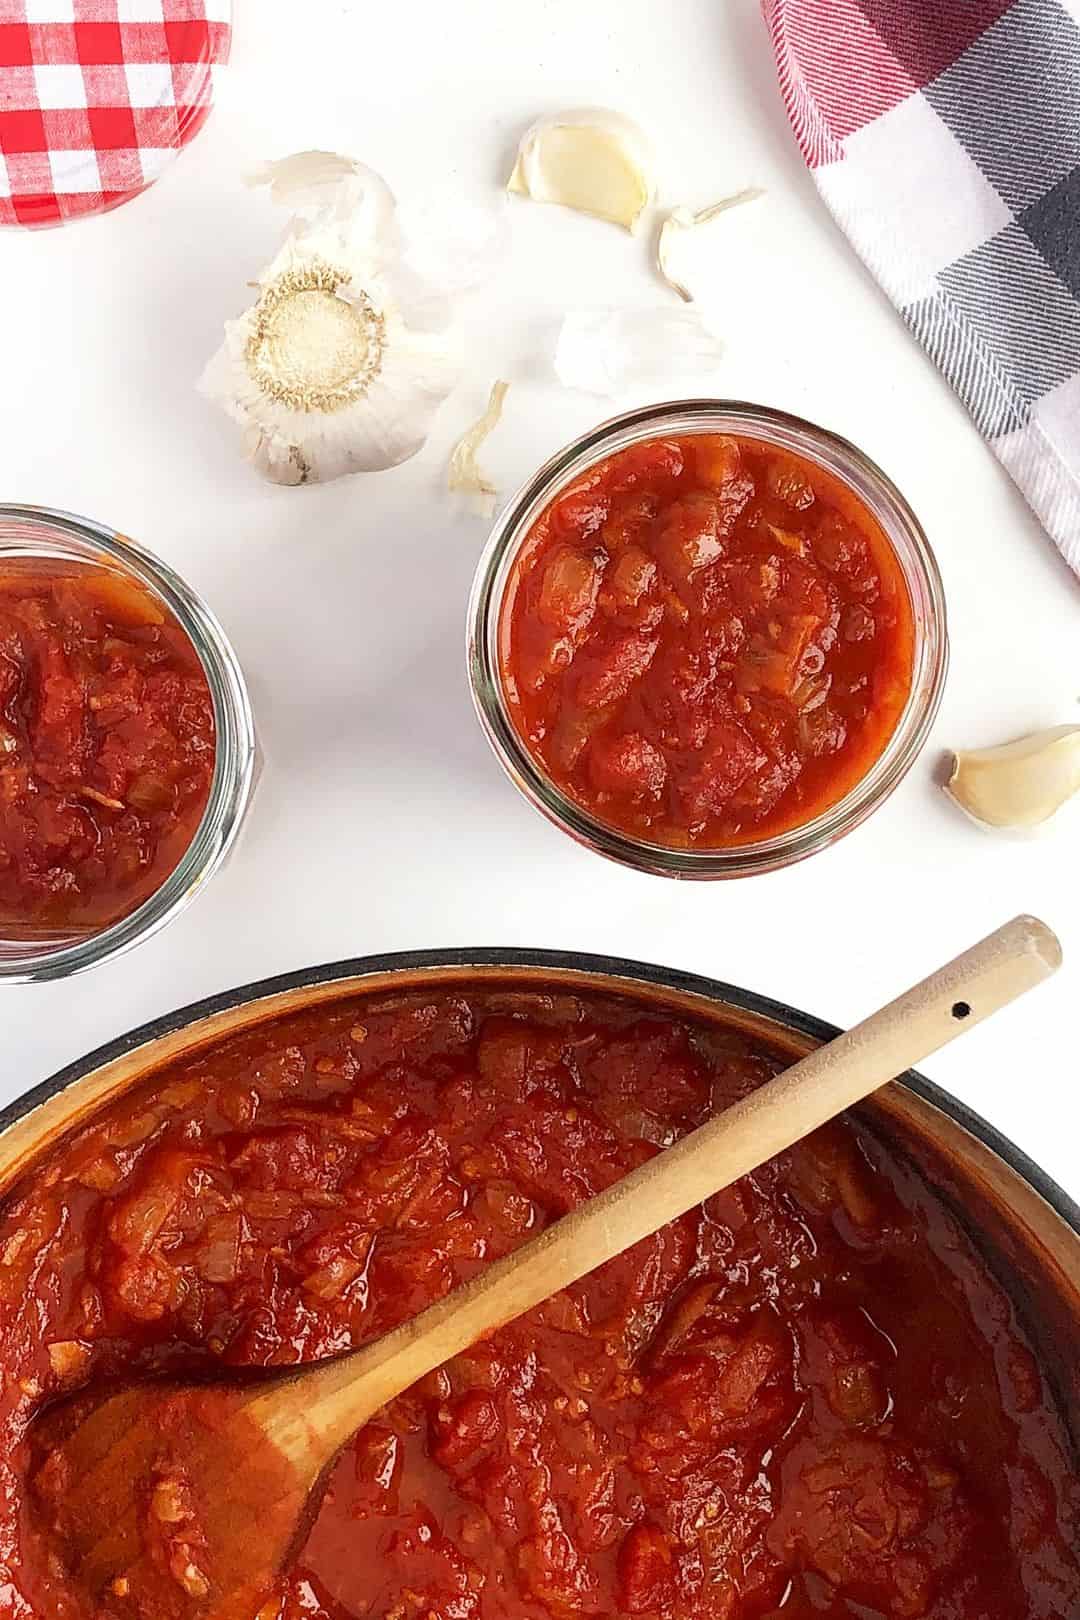 How to make homemade tomato sauce